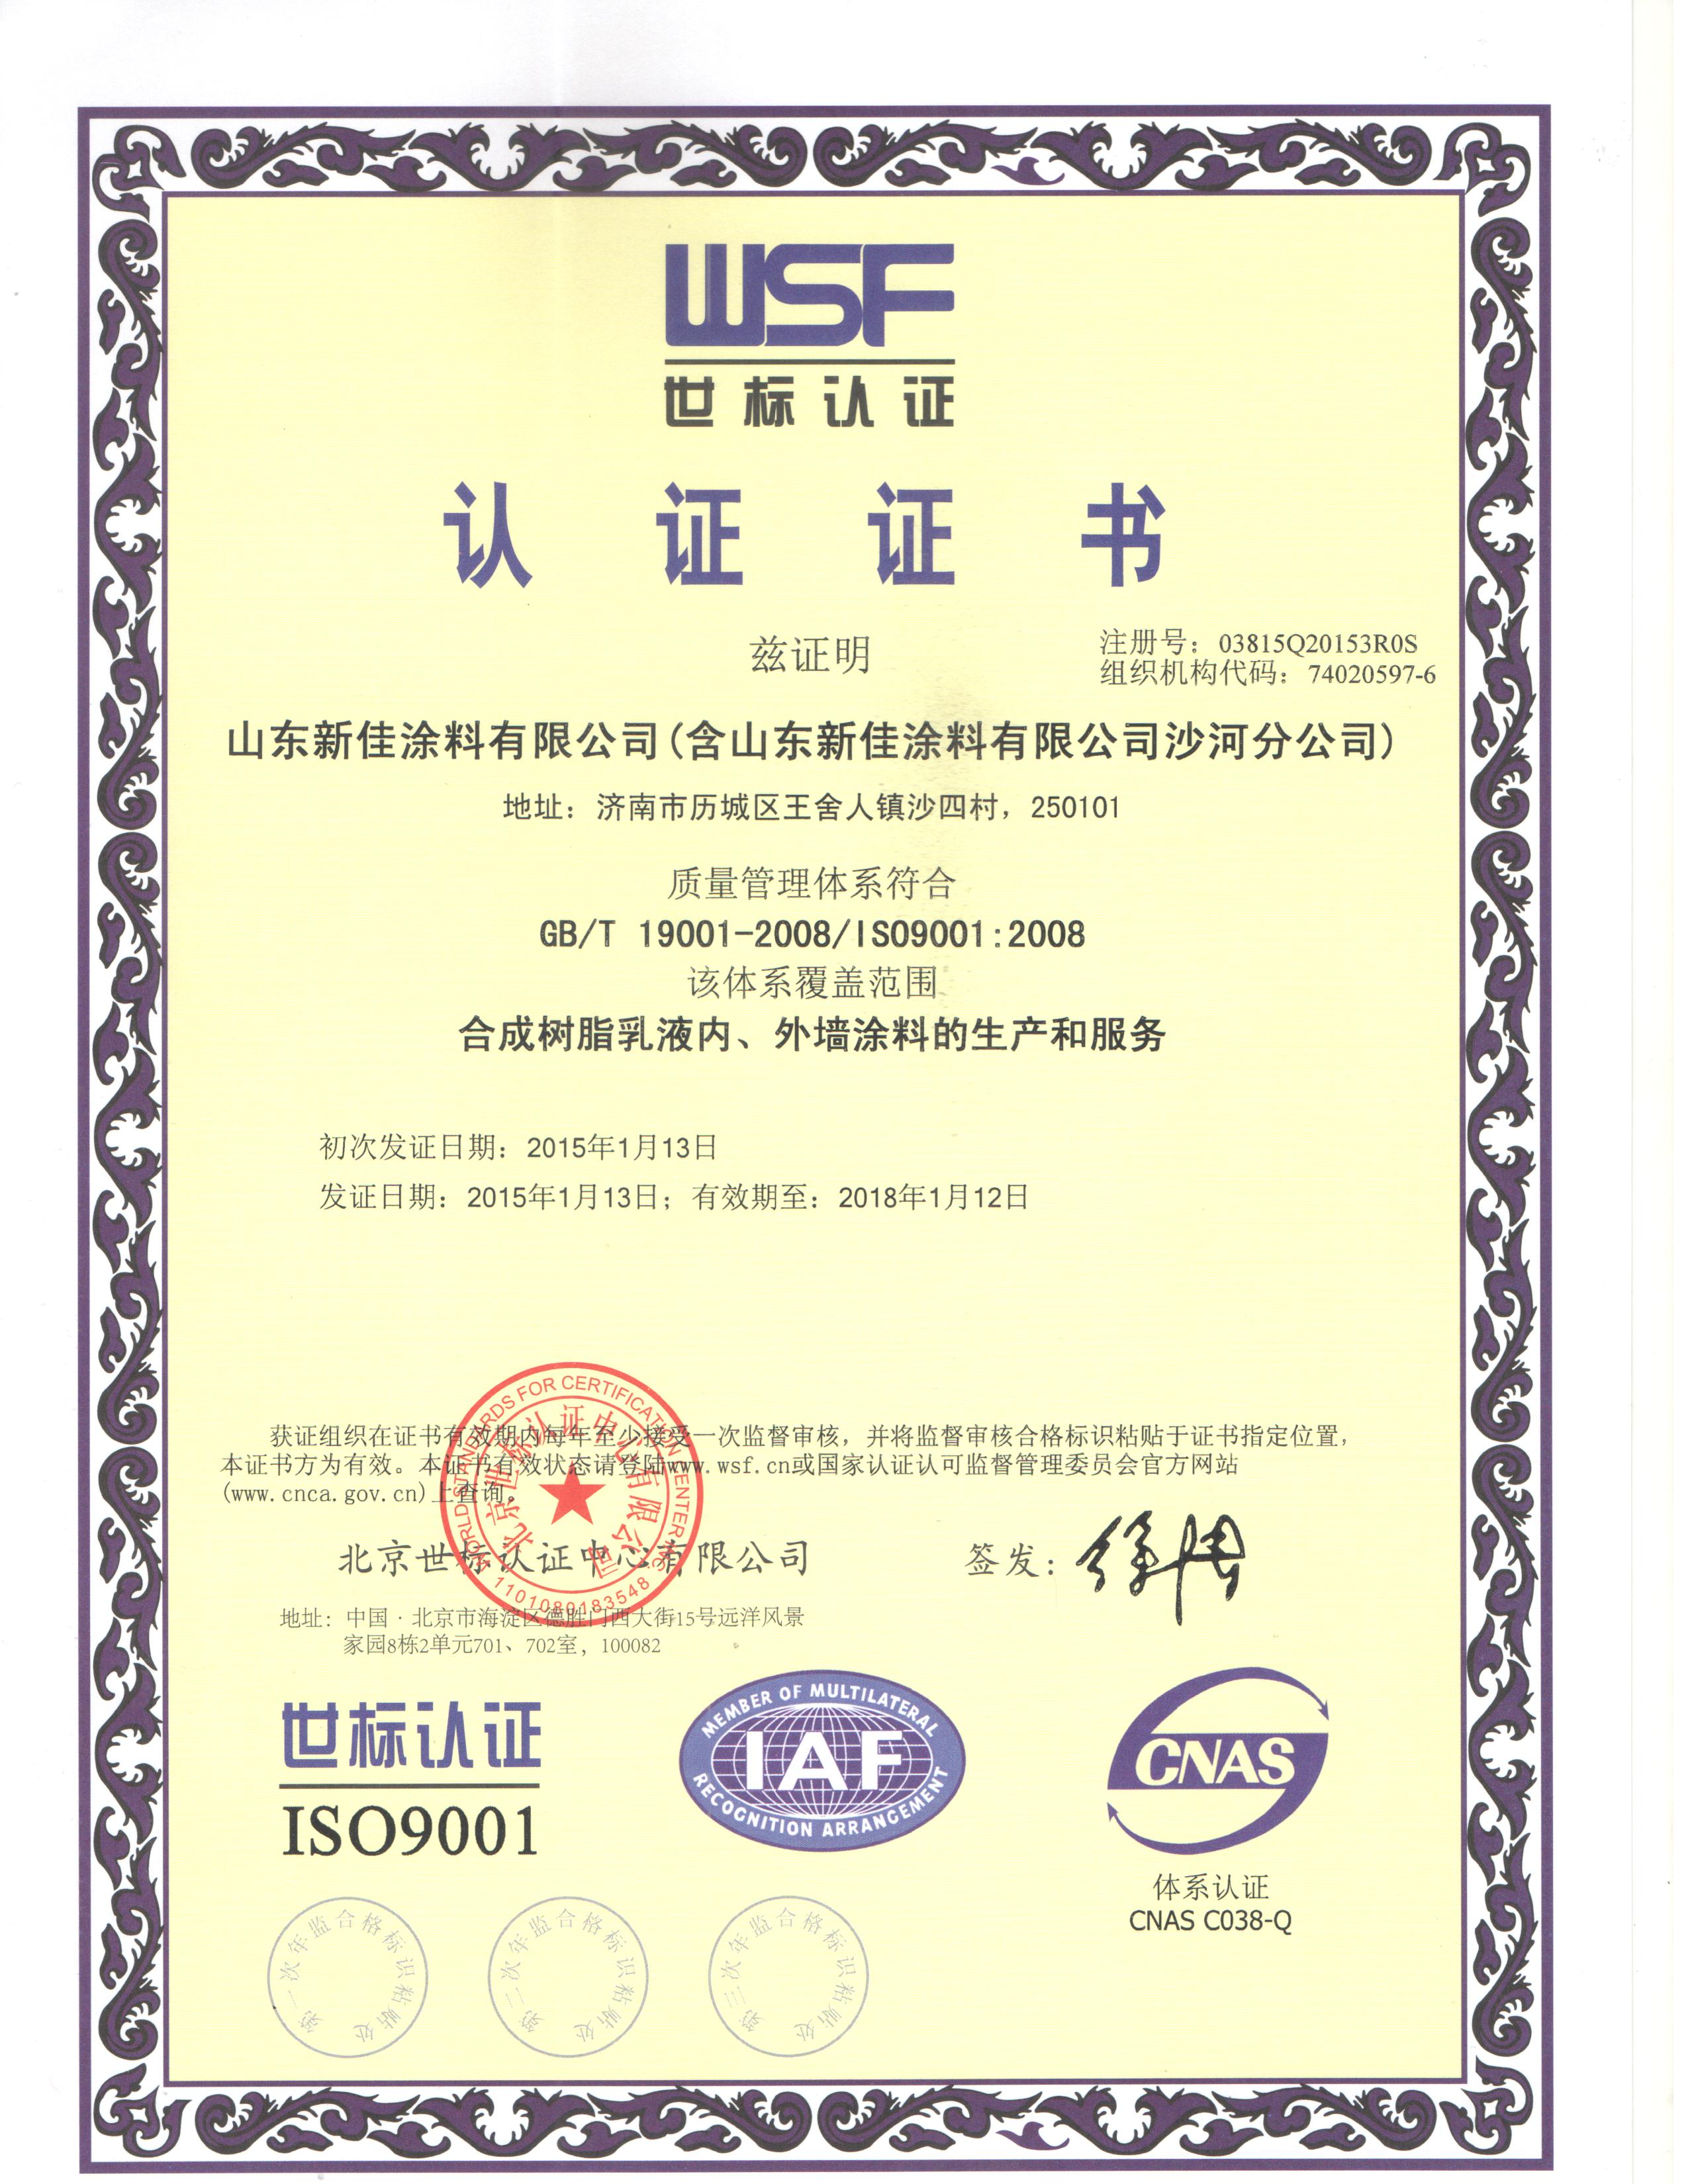 ISO 9001國際質量管理體系認證證書